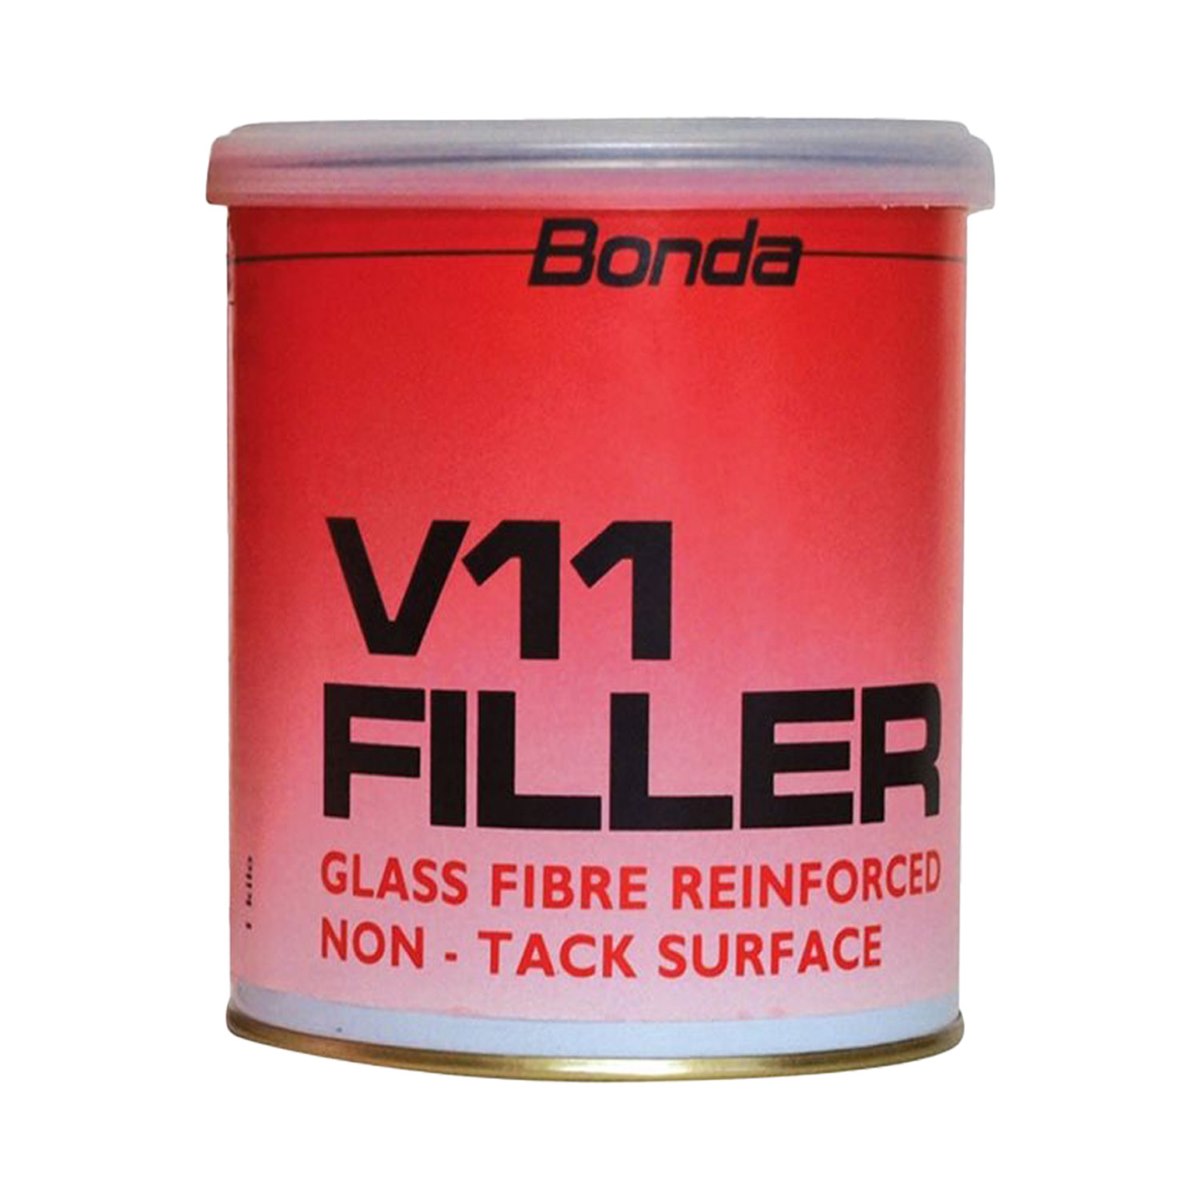 Bonda V11 Glassfibre Filler 2.5kg